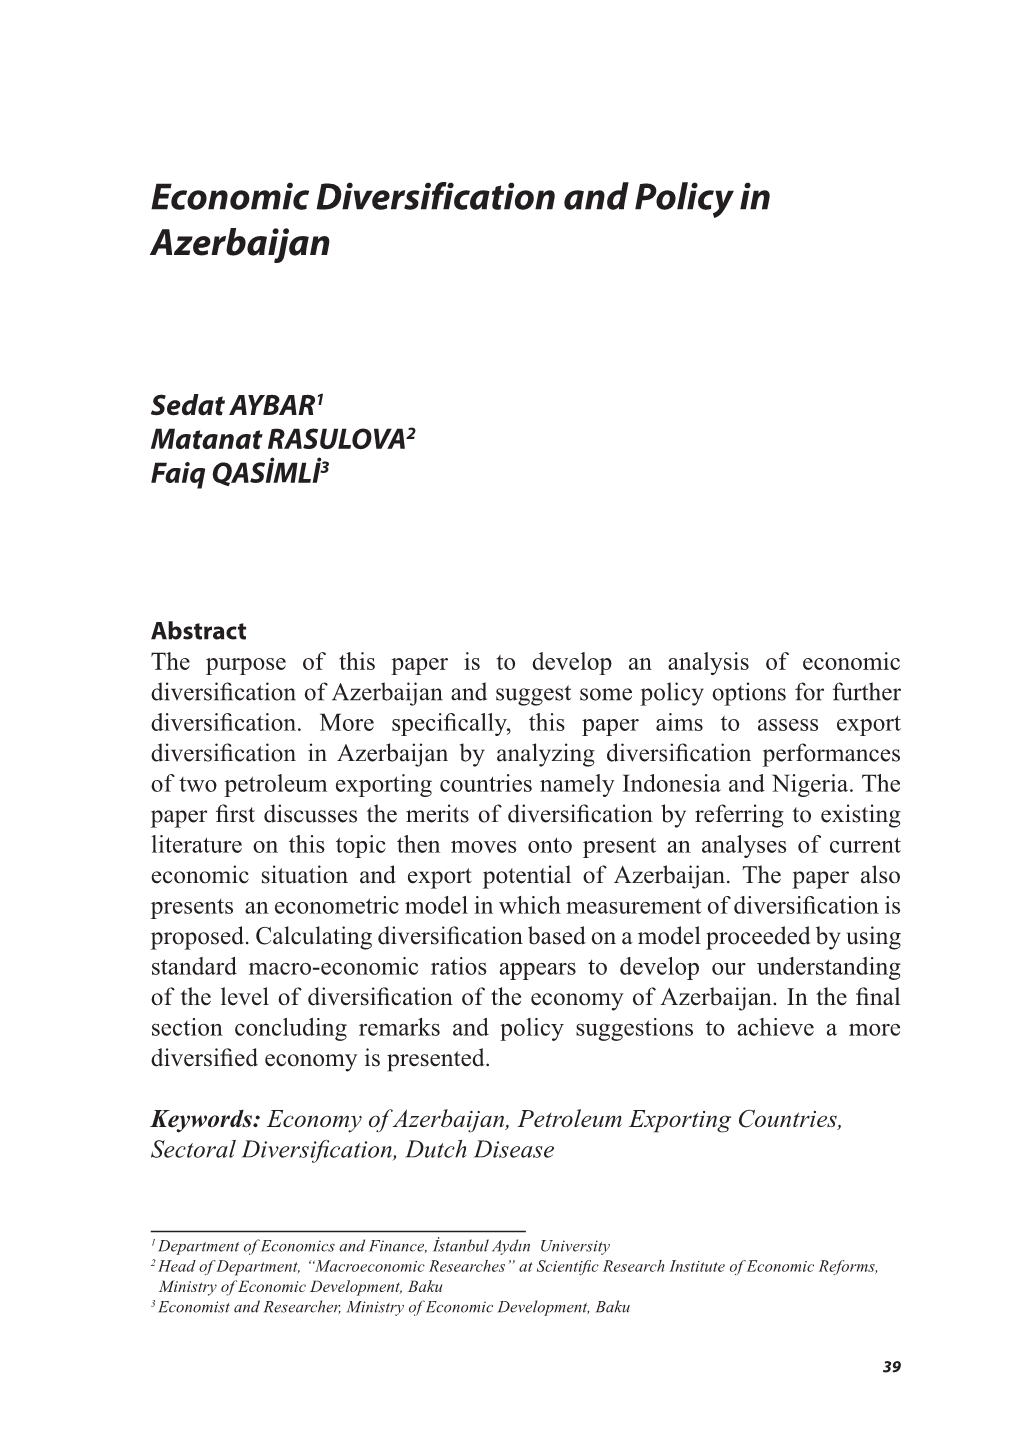 Economic Diversification and Policy in Azerbaijan